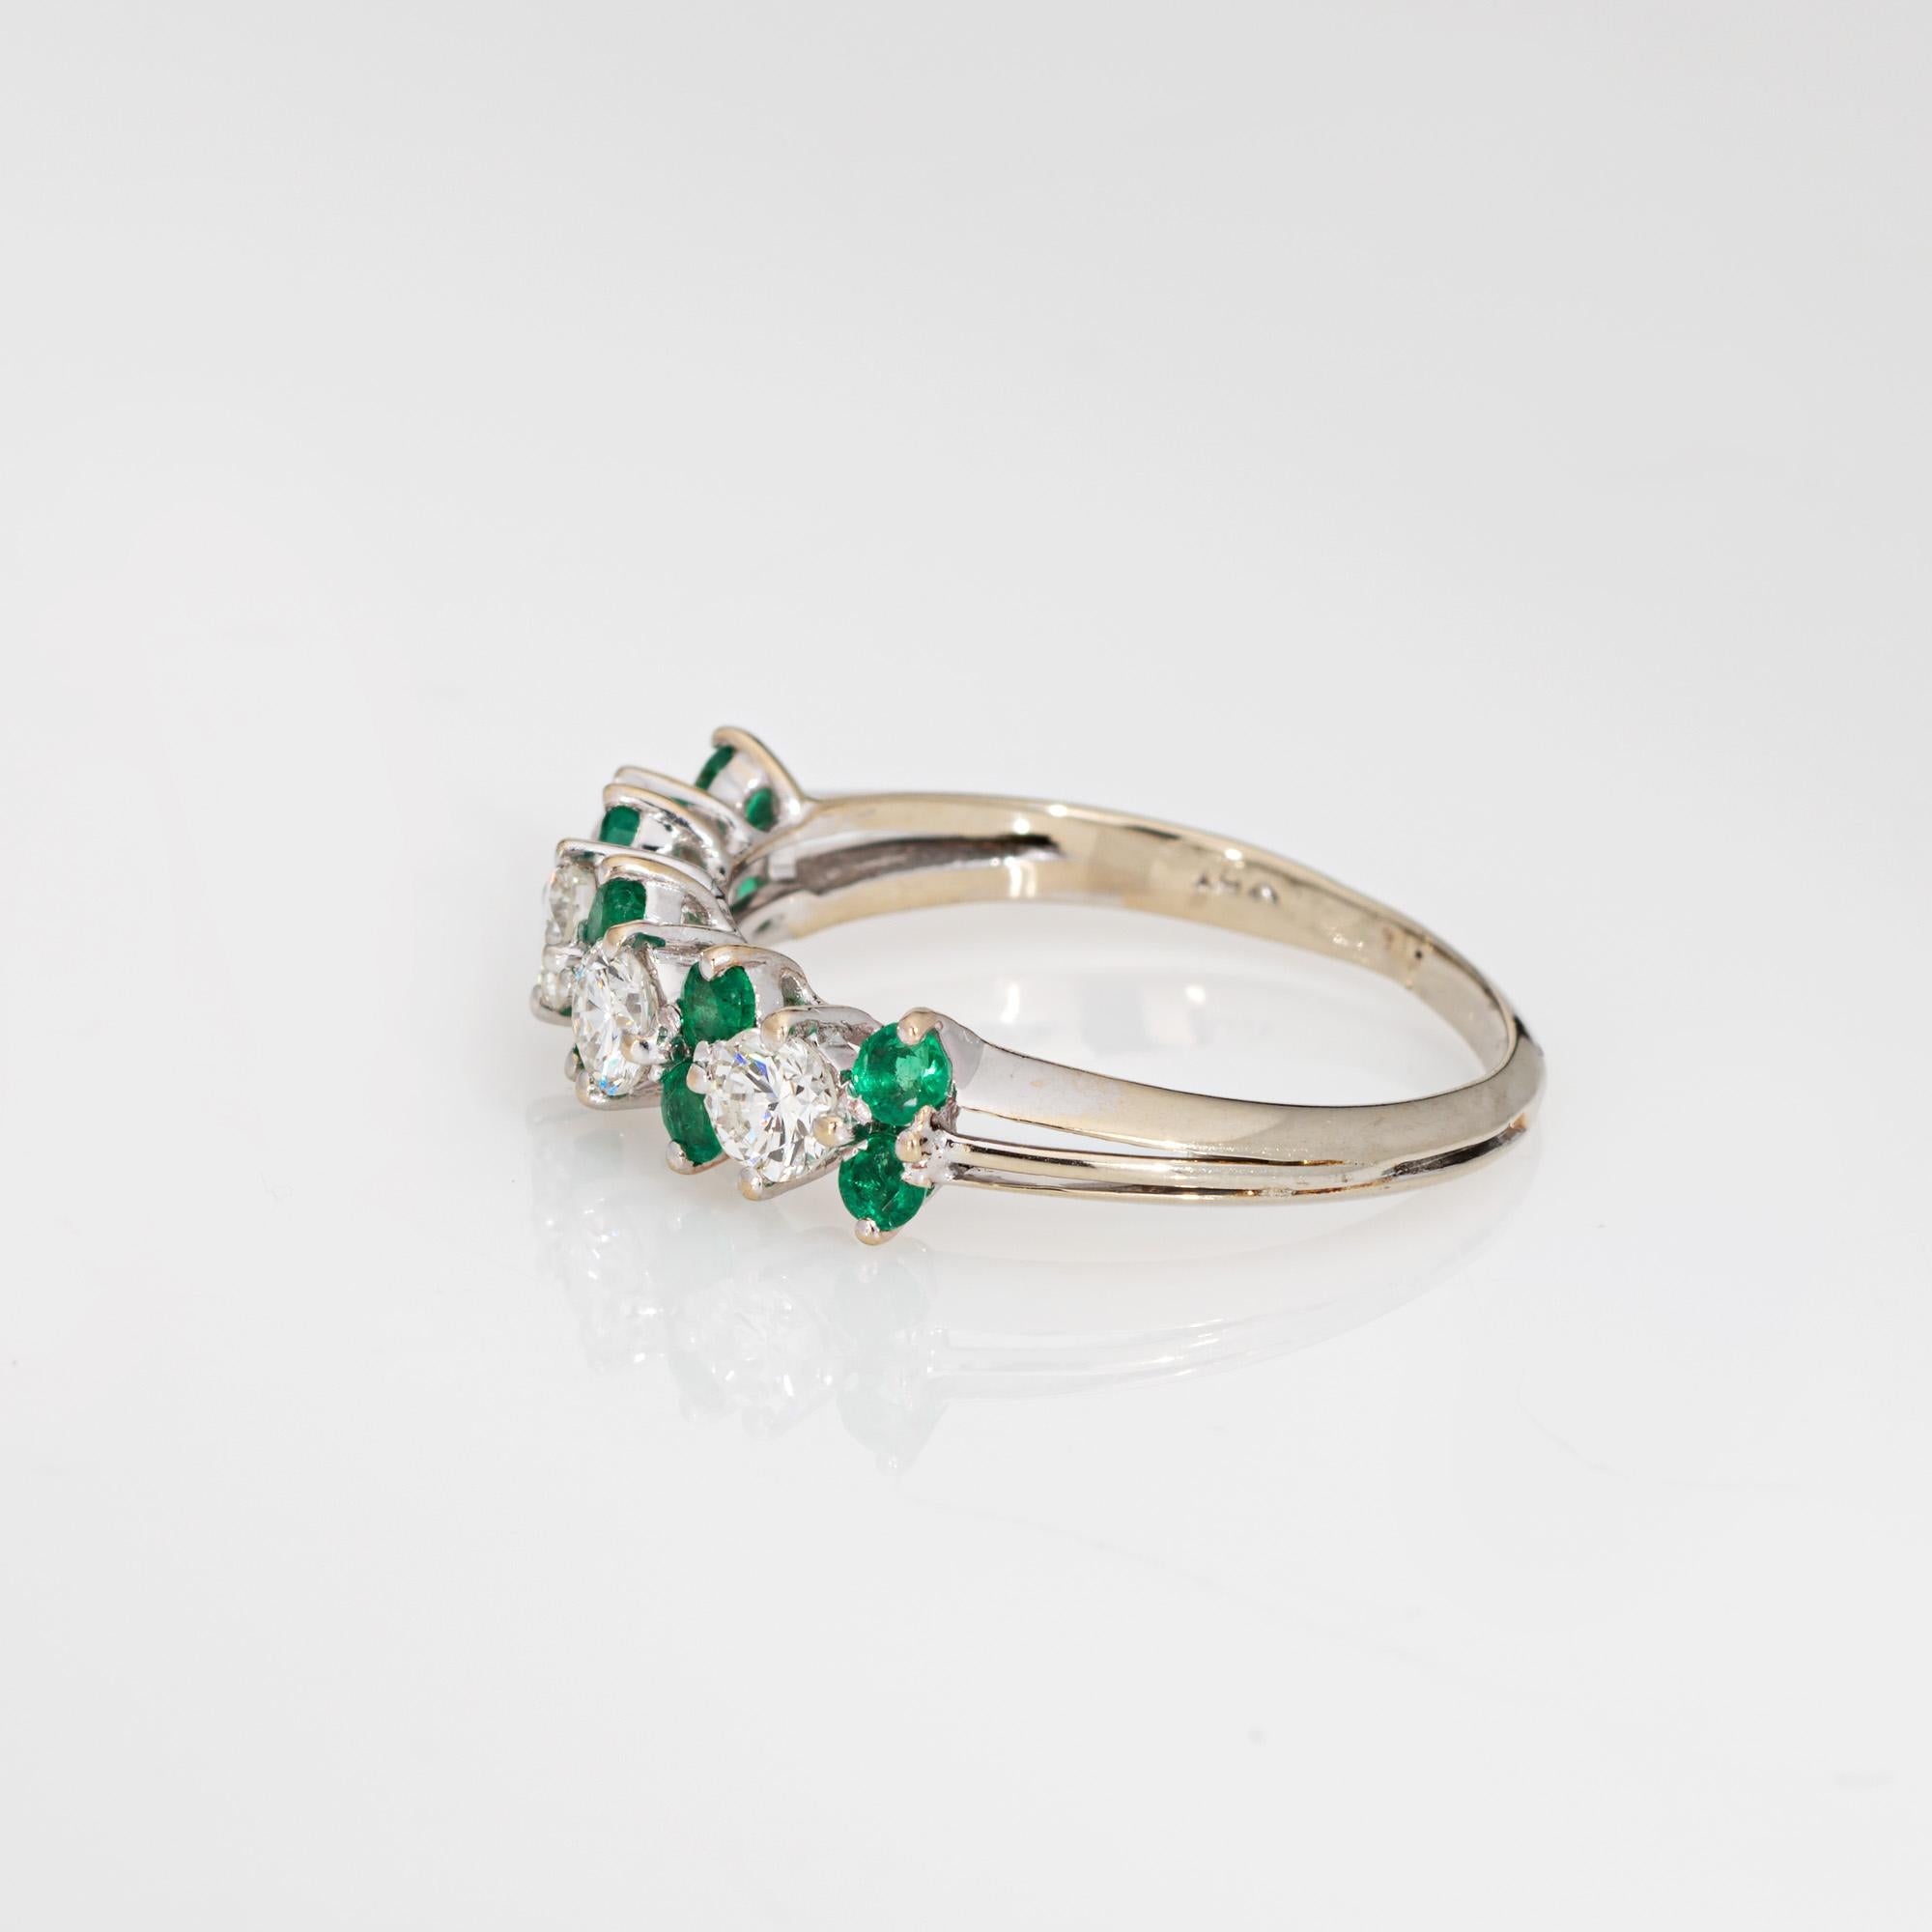 Round Cut Diamond Emerald Ring Gemstone Band 18k White Gold Anniversary Fine Jewelry